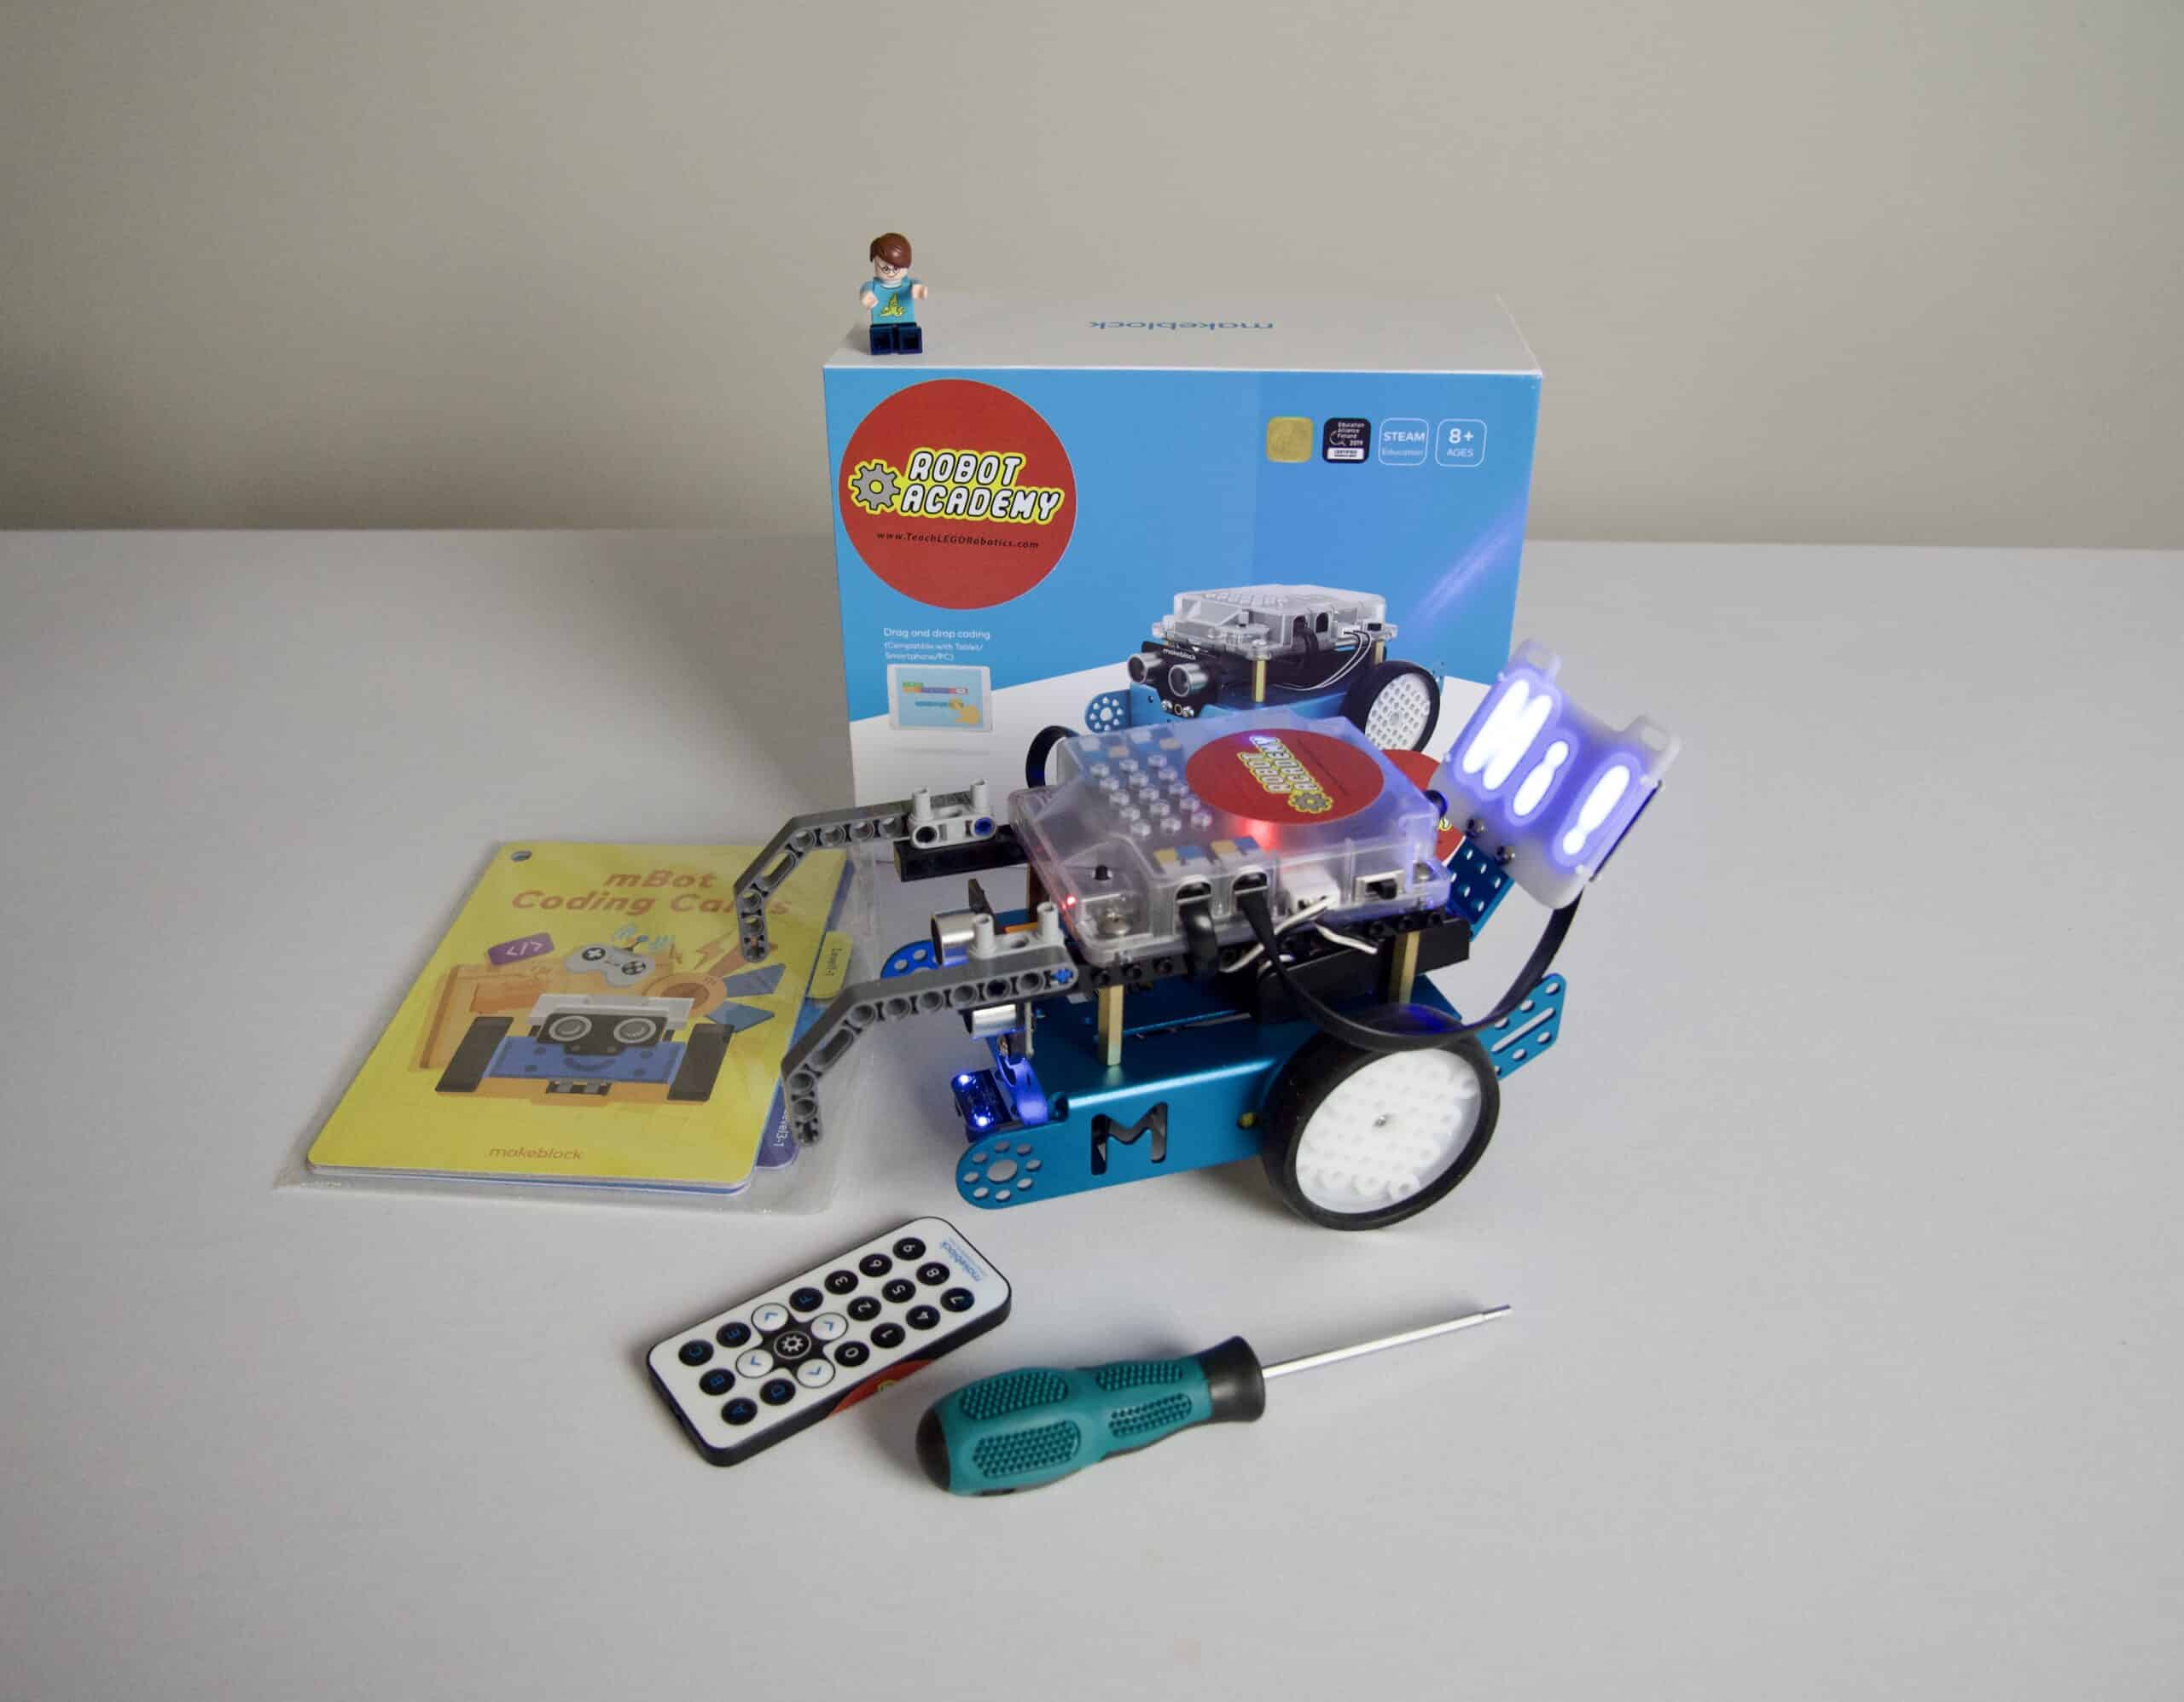 CYBER MONDAY BUNDLE: Robot Academy Arduino LEGO® Robot Basic Bundle with Instructional Video